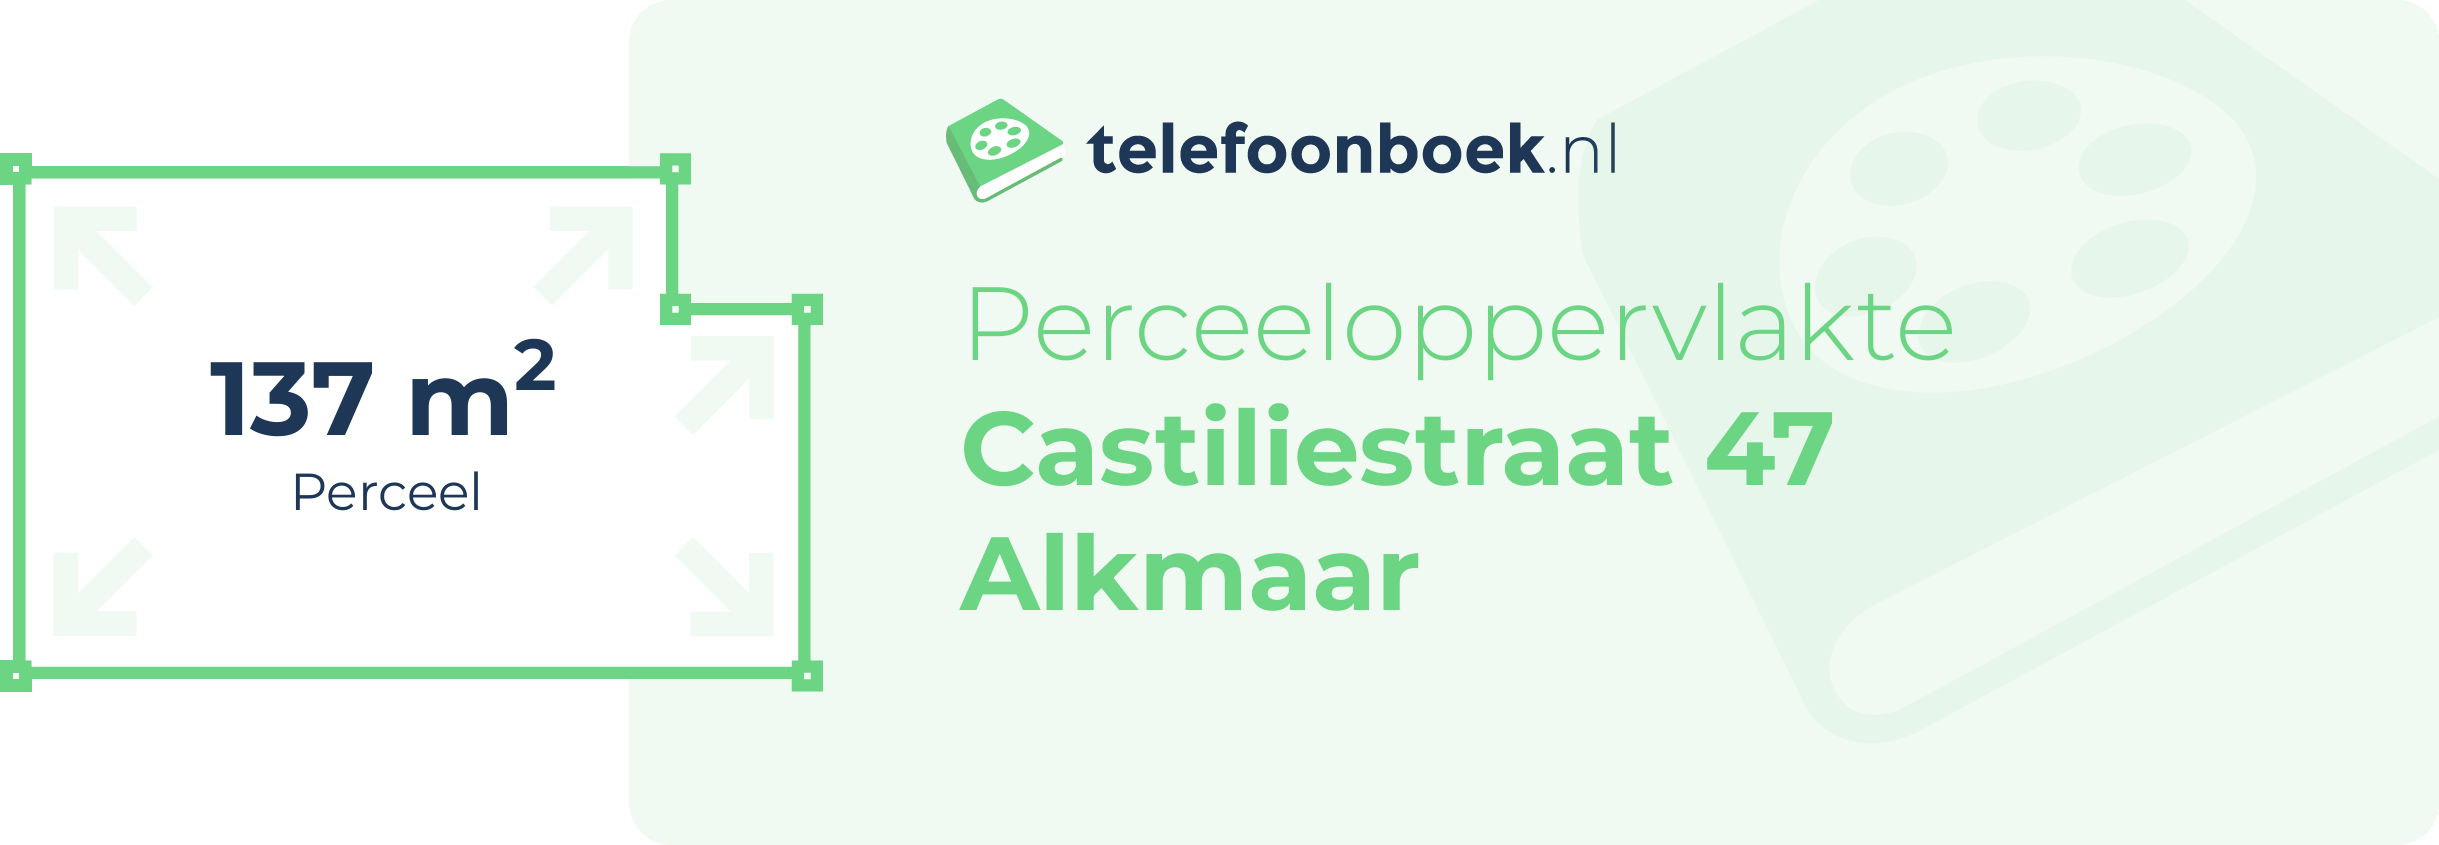 Perceeloppervlakte Castiliestraat 47 Alkmaar